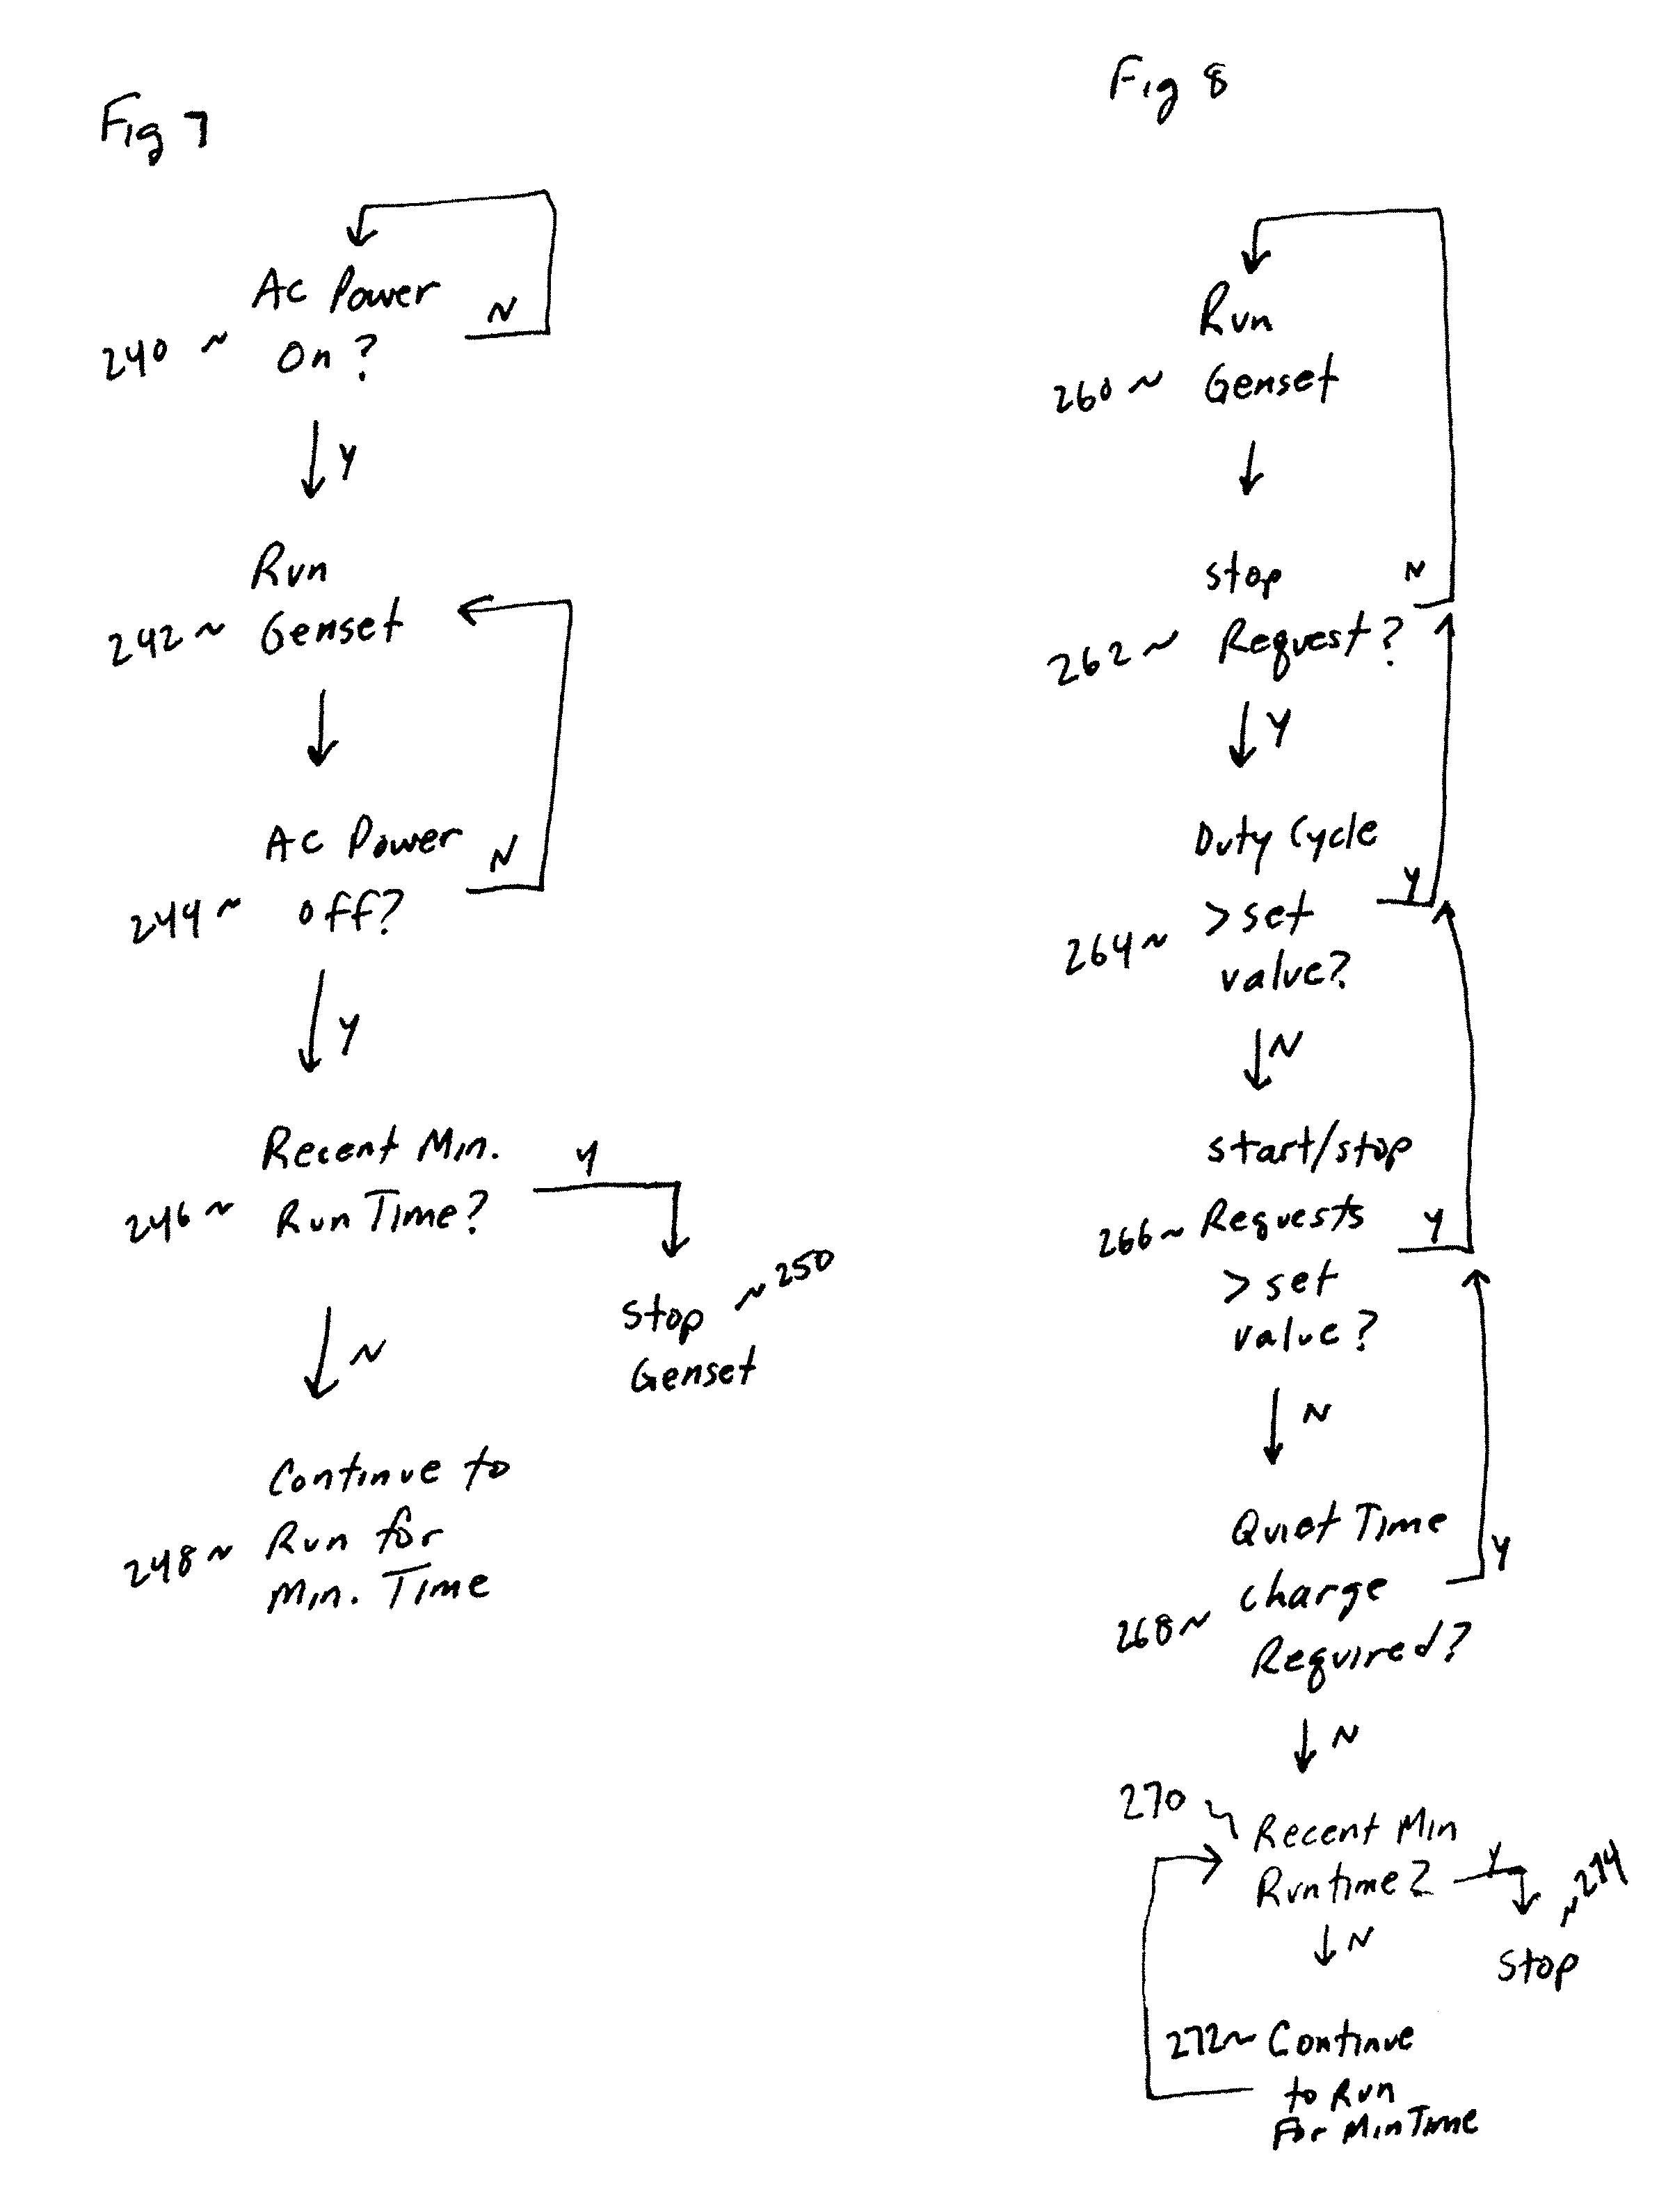 onan microquiet remote wiring diagram